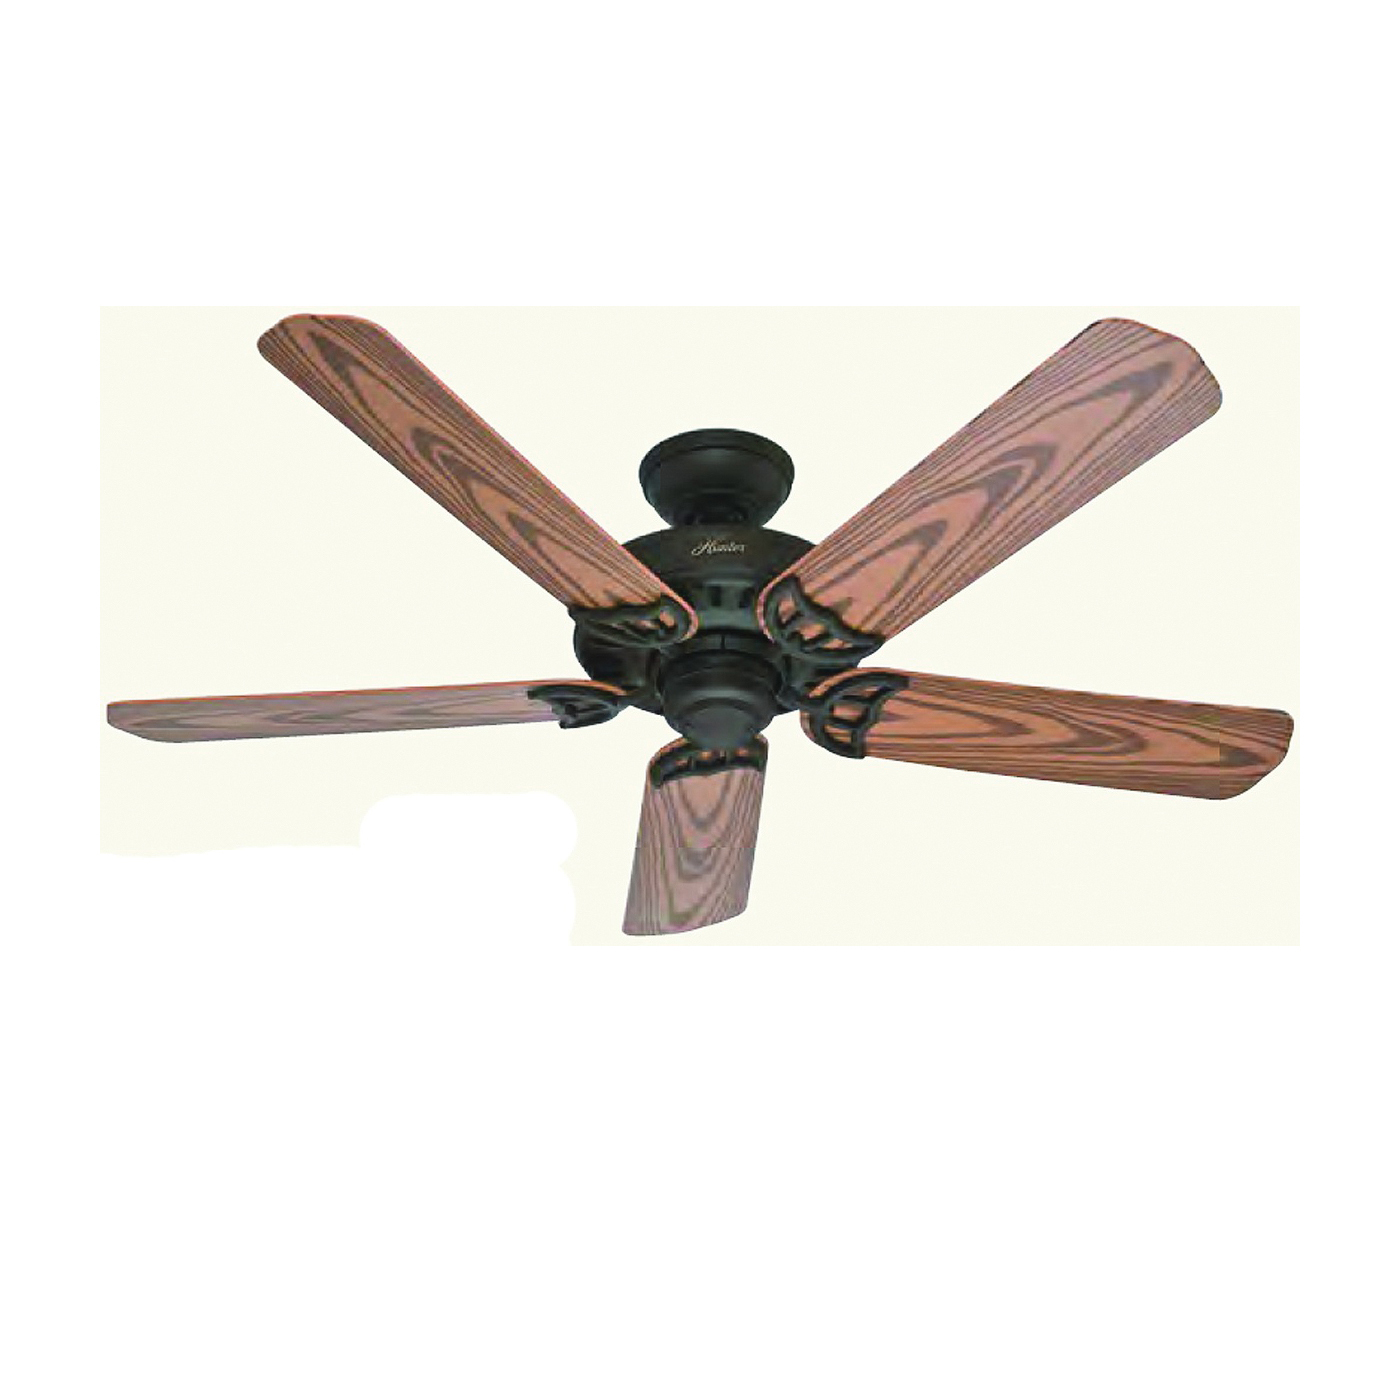 Bridgeport Series 53126 Ceiling Fan, 5-Blade, Oak Blade, 52 in Sweep, Plastic Blade, 3-Speed, With Lights: No